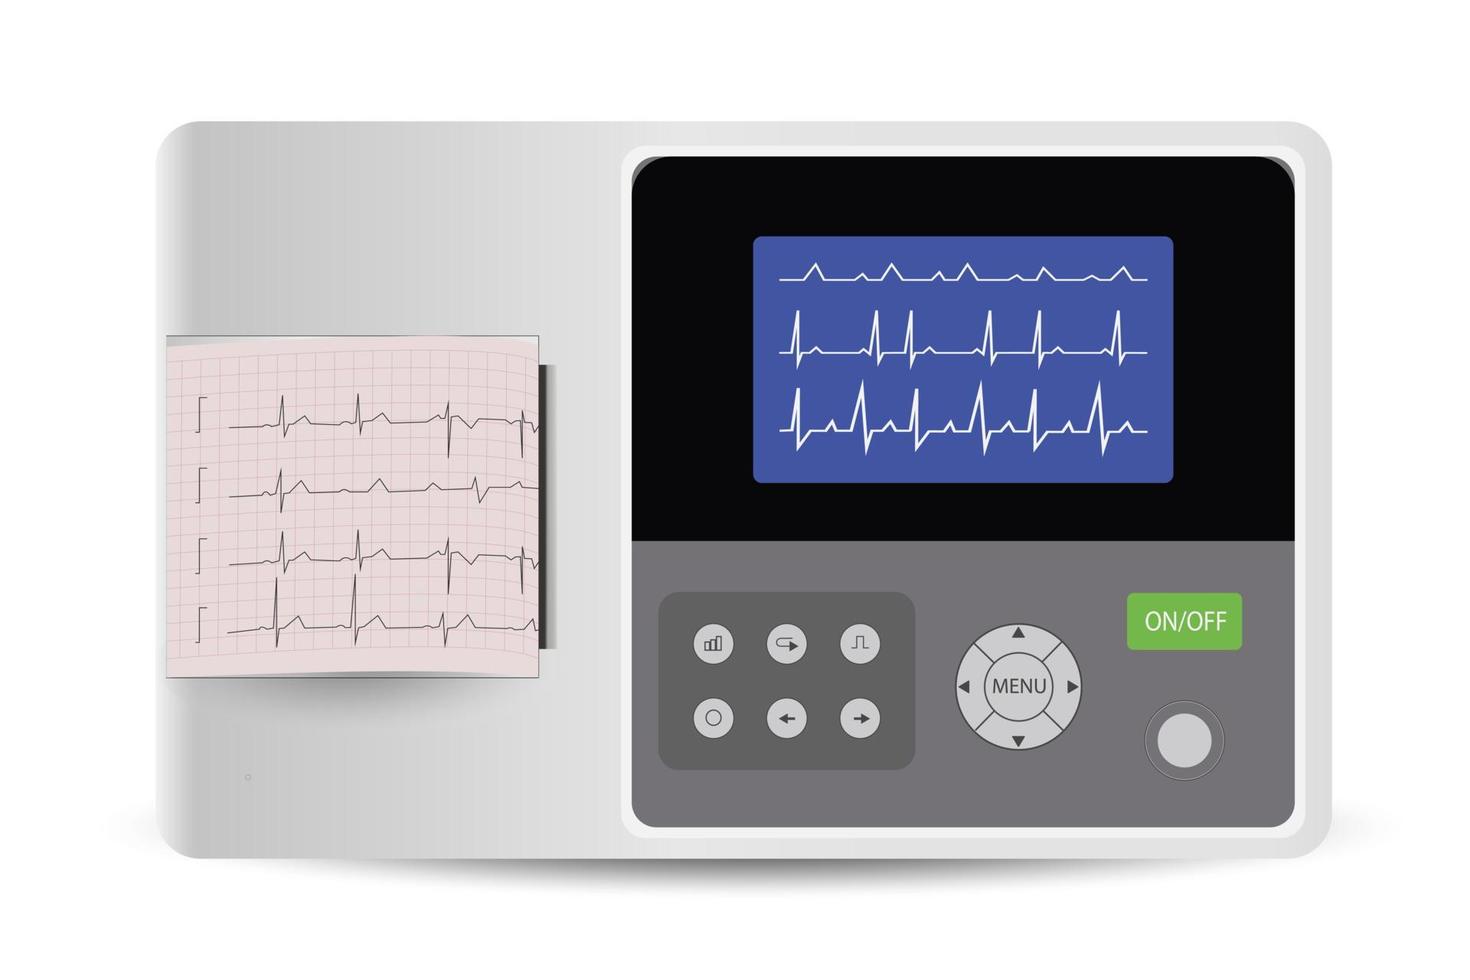 monitorización electrocardiográfica del paciente - dispositivo médico aislado en blanco vector